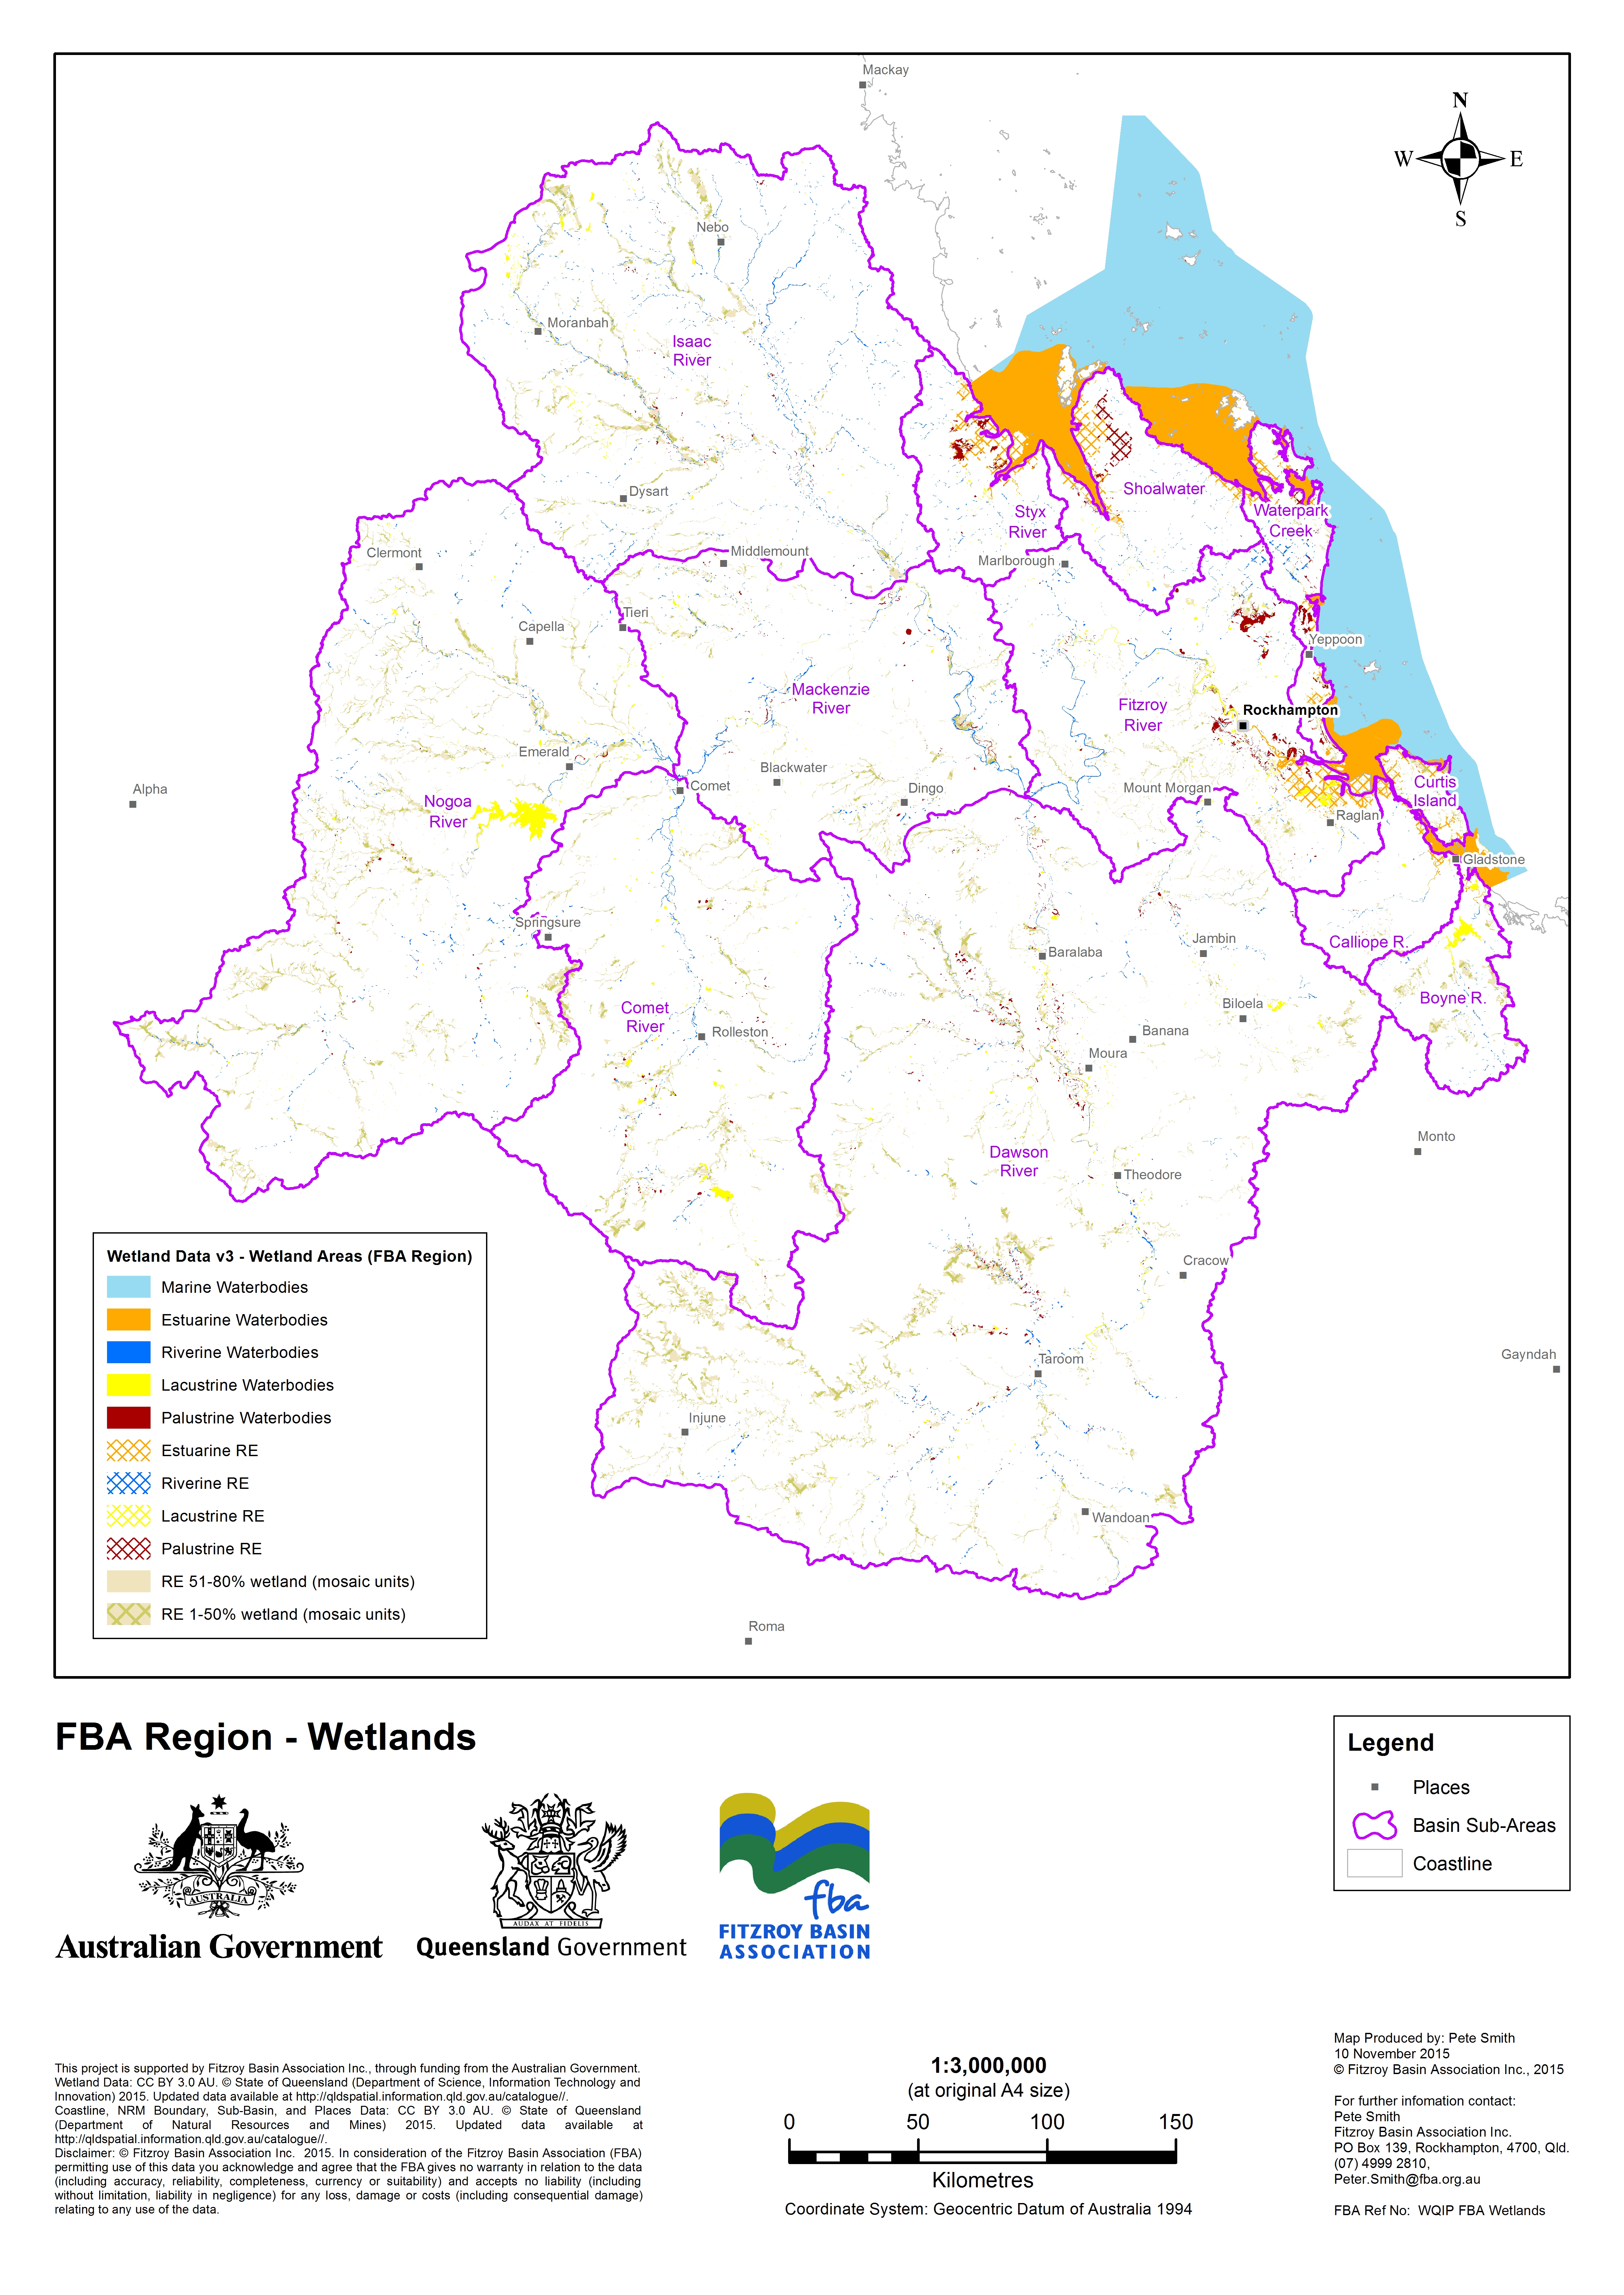 Fitzroy Basin wetland locations